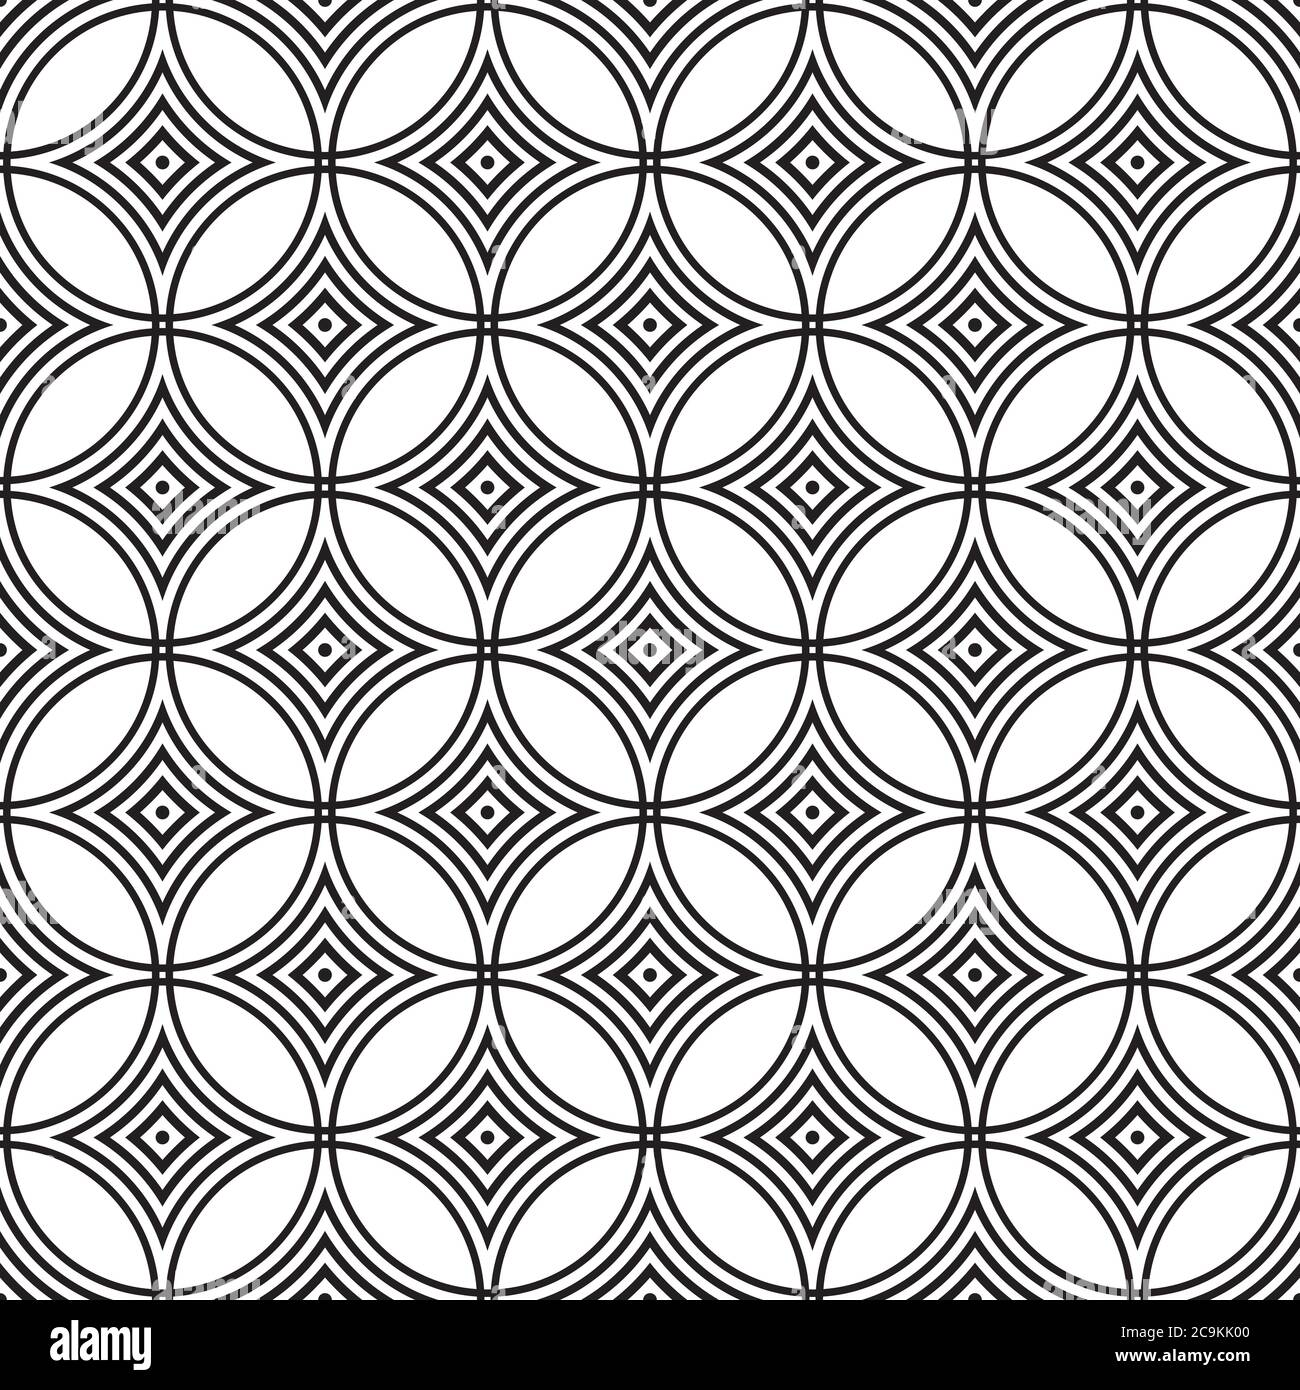 Repeating Mid-Century Wallpaper Pattern | Seamless 60s Mod Design |  Geometric Retro Print | Stock Vector | Adobe Stock